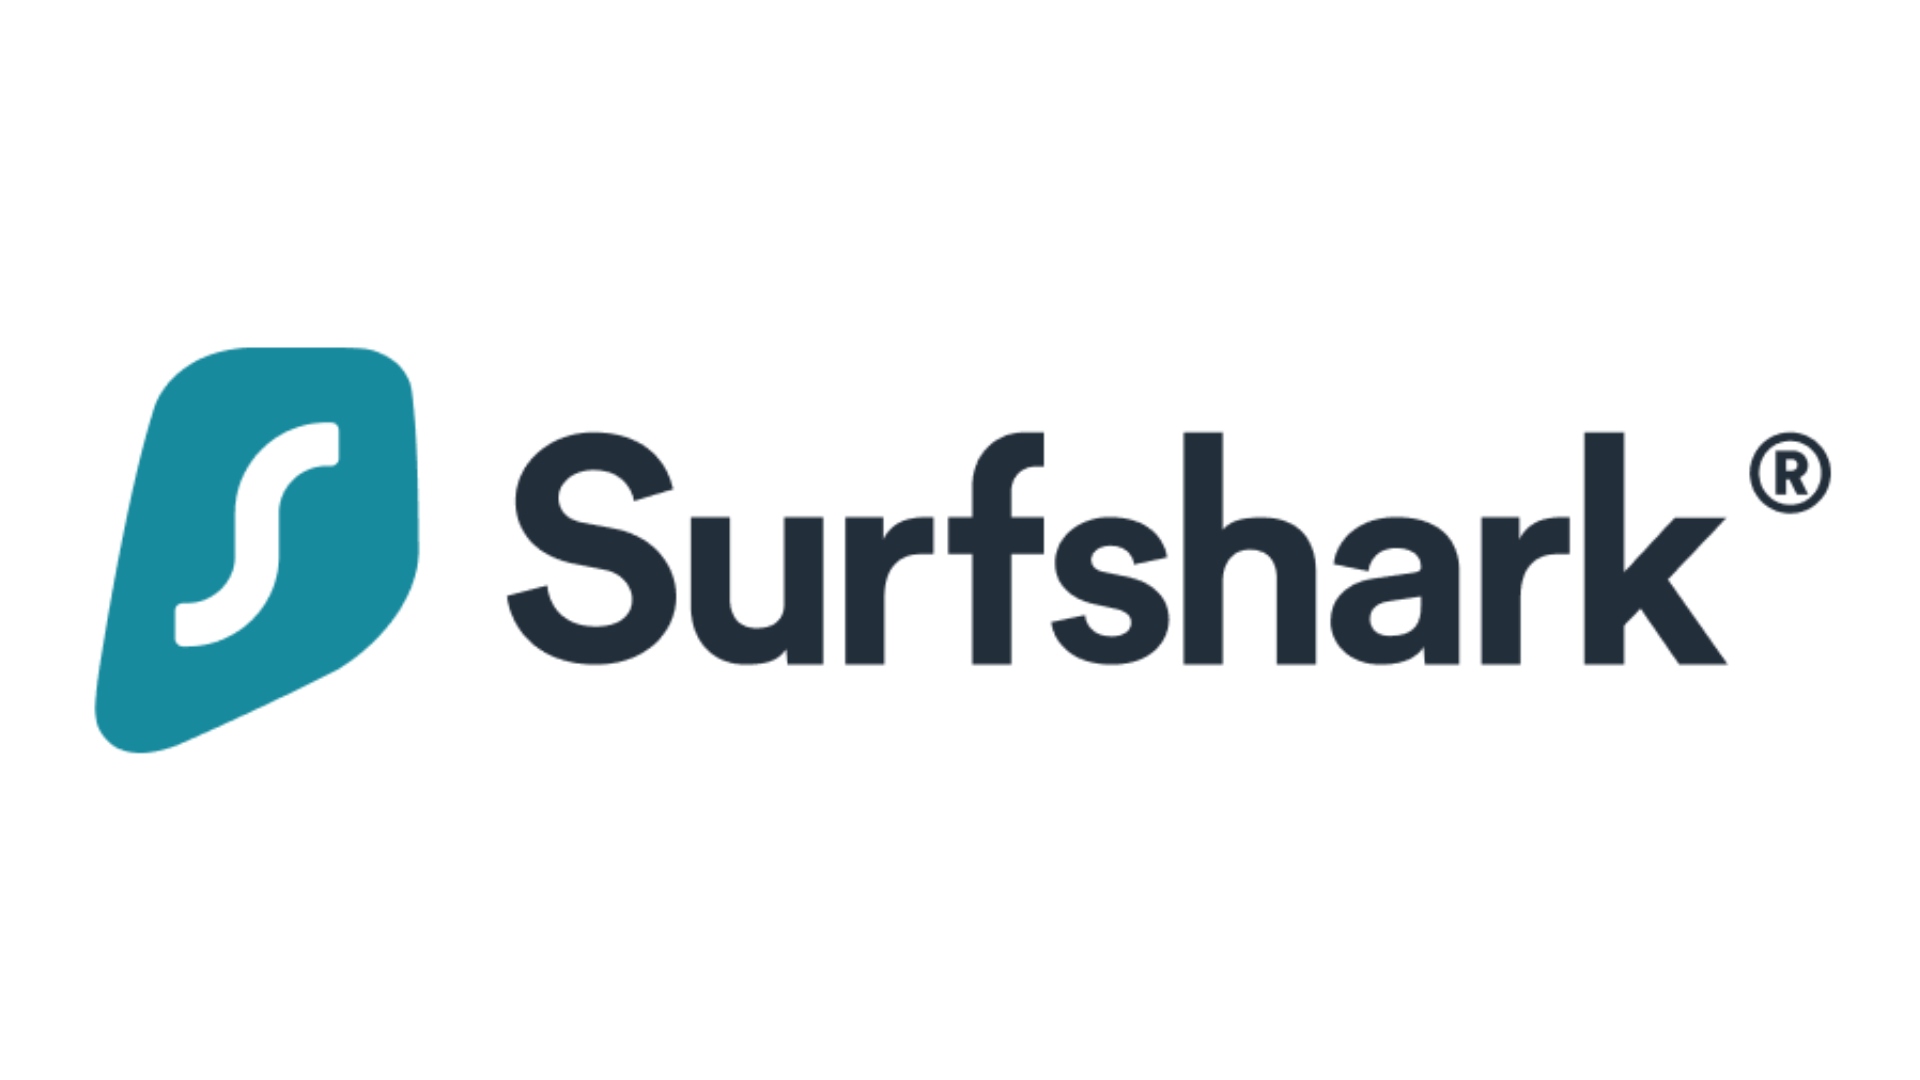 Best antivirus: image shows the Surfshark logo.